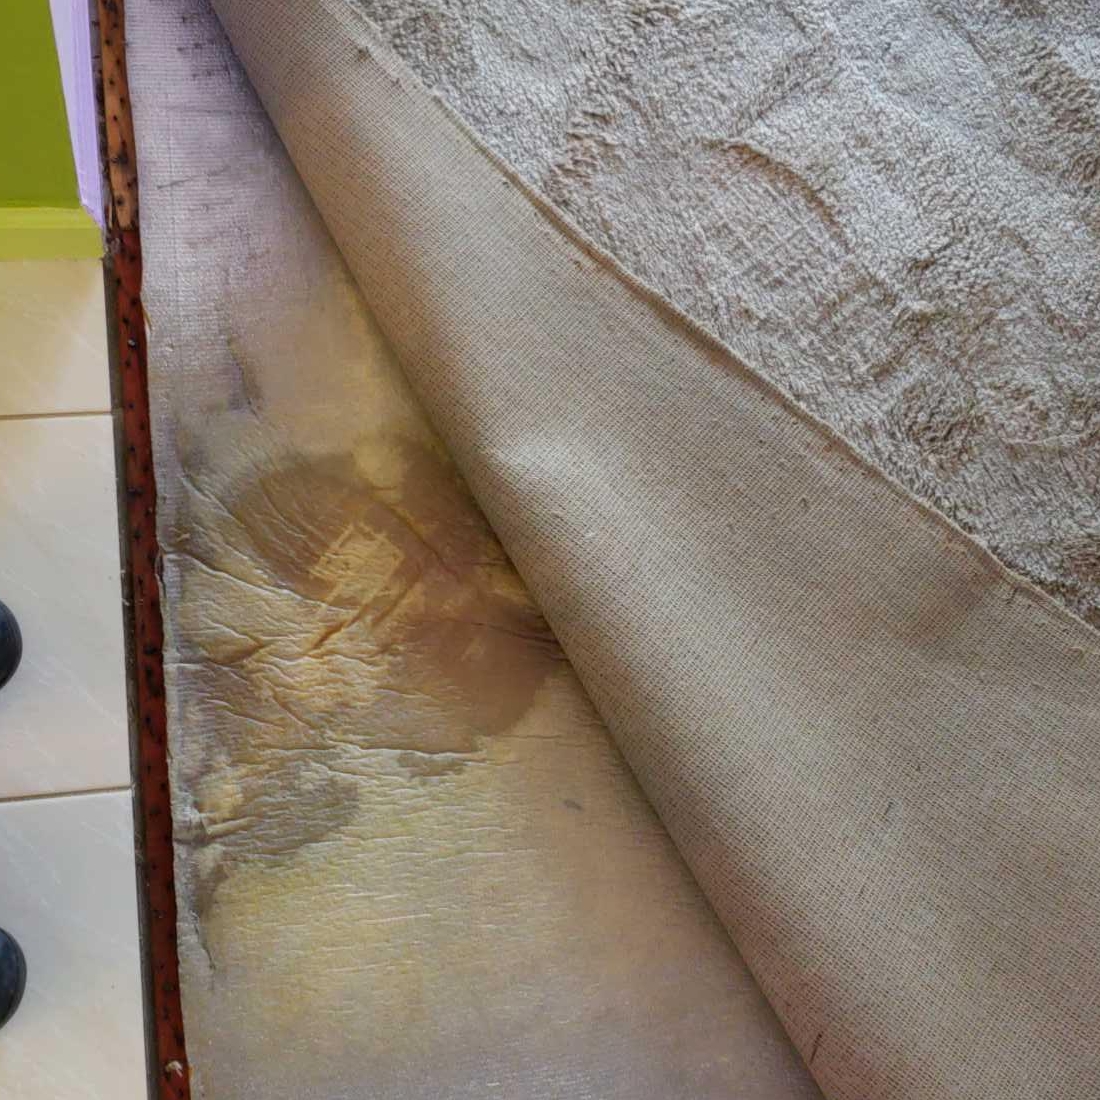 Wet Carpet Damage